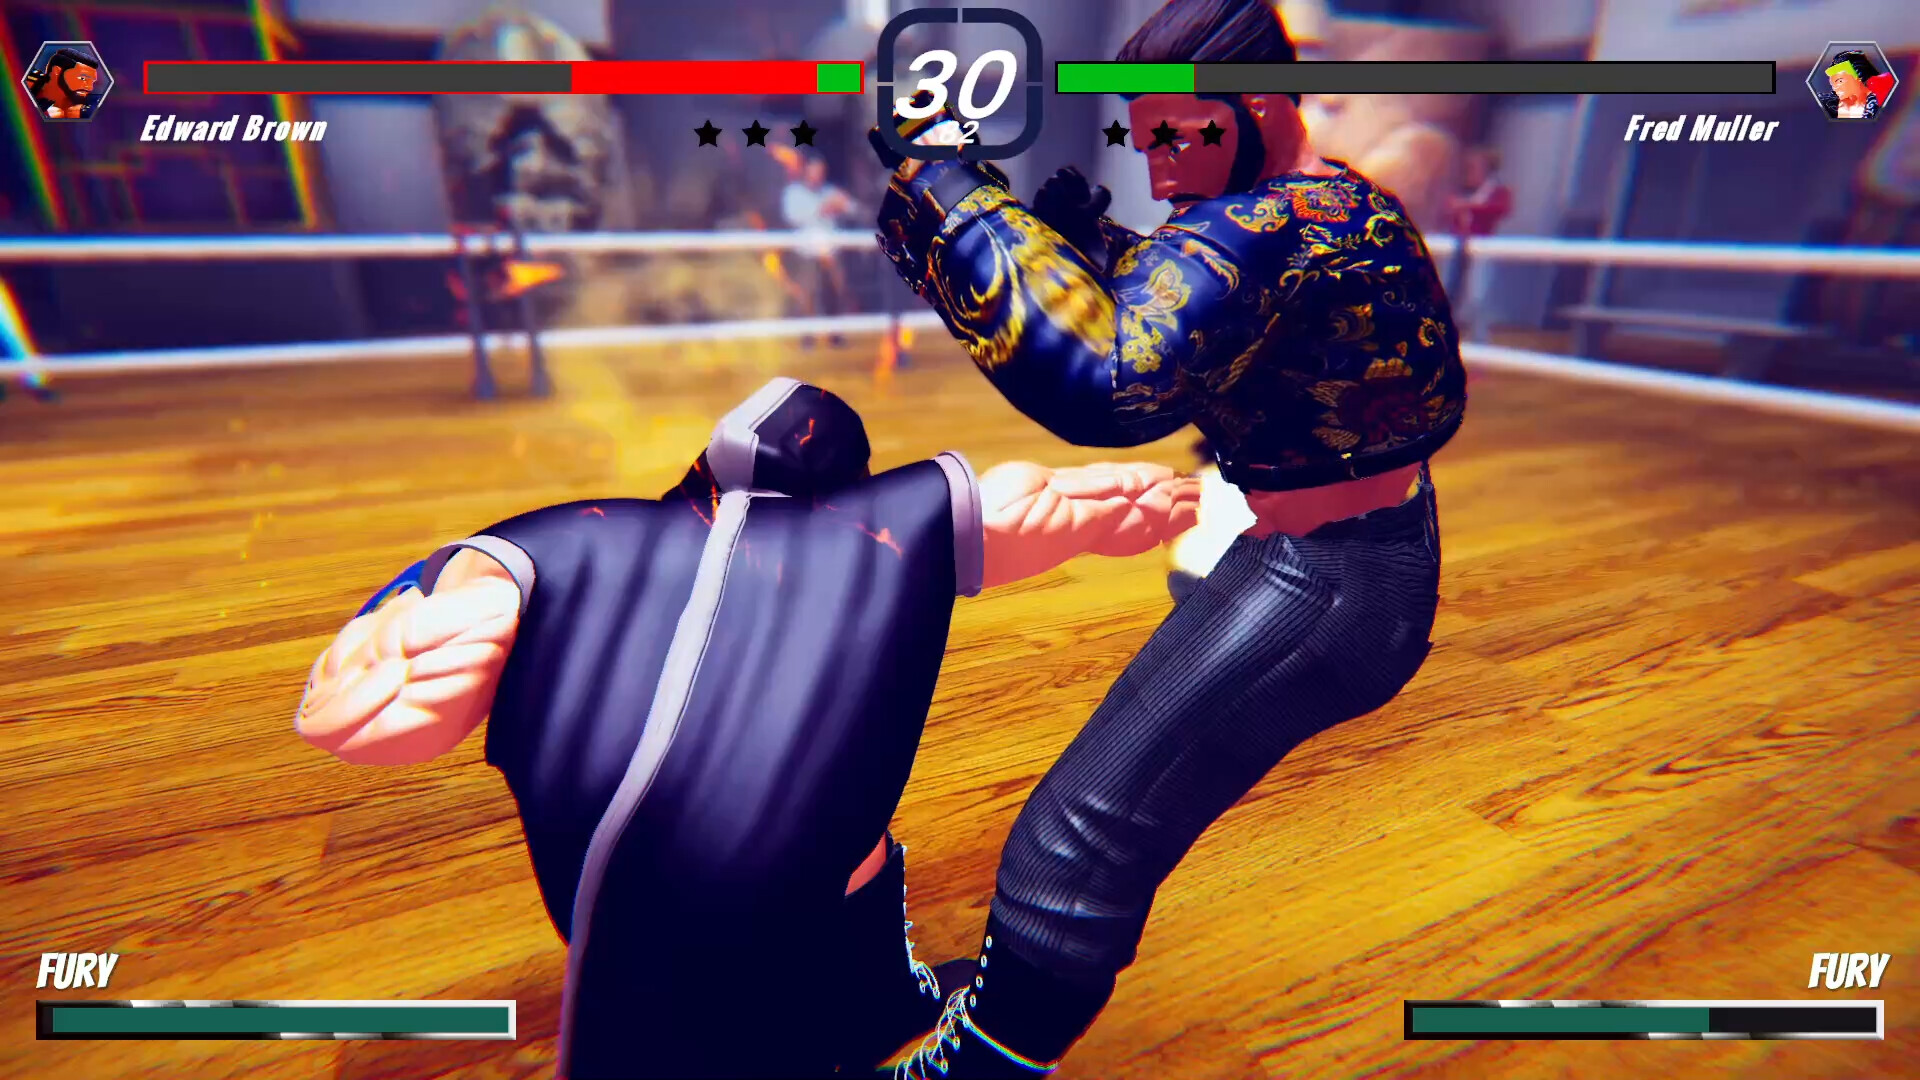 Unlimited Fight Ultimate Strike Steam CD Key